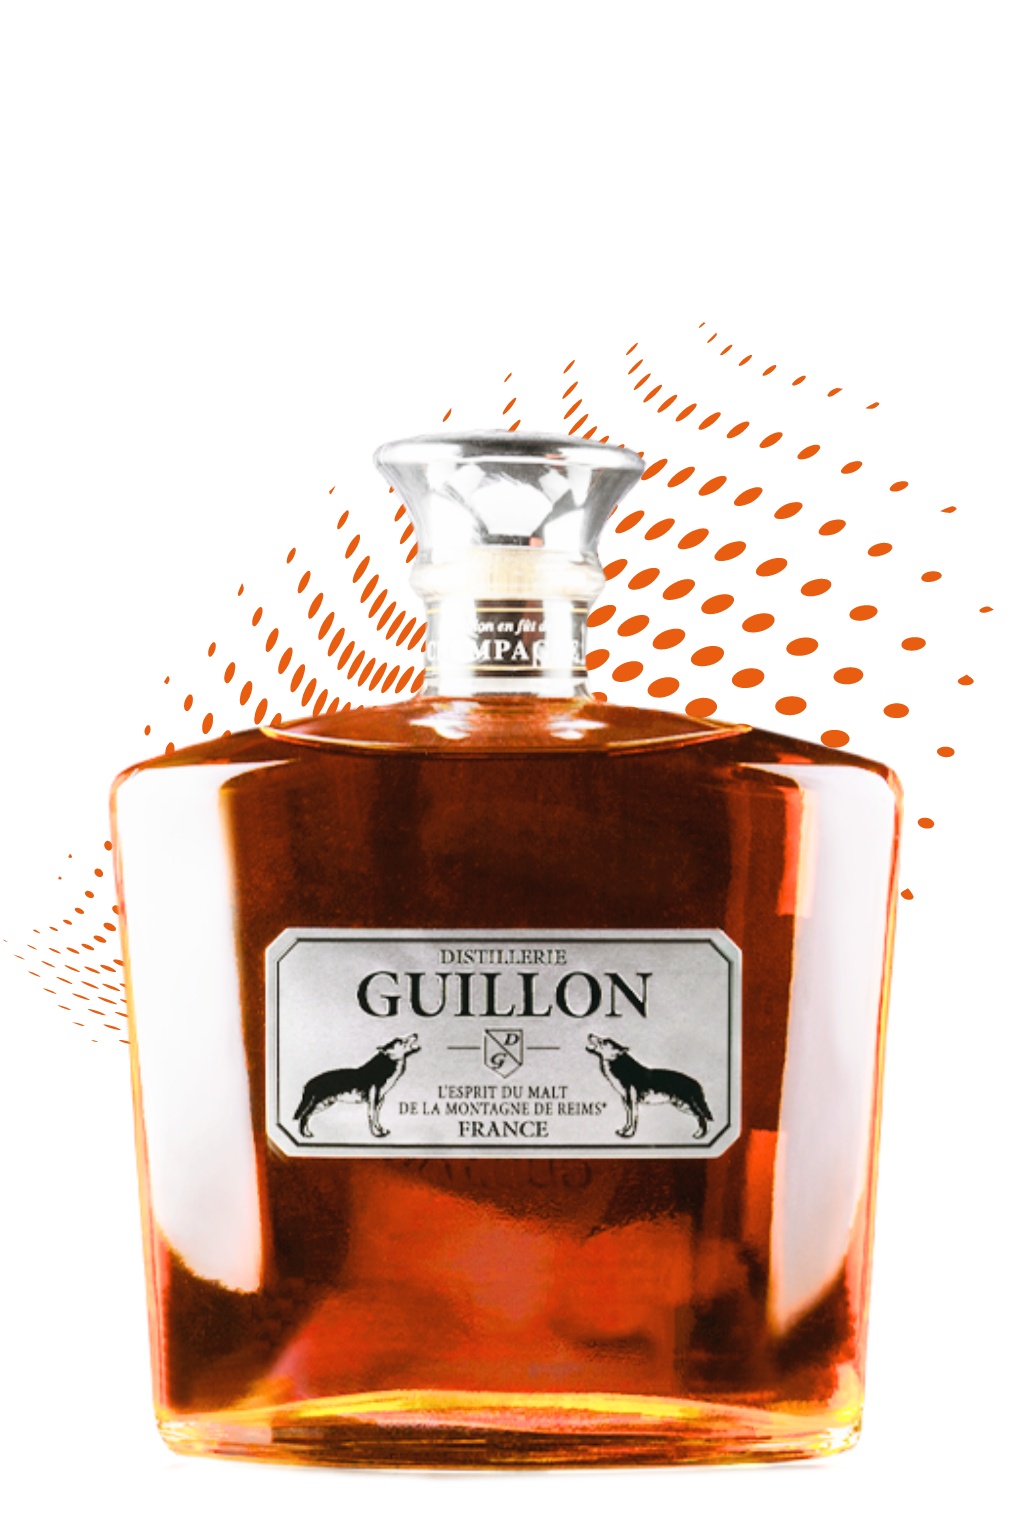 Guillon whisky français